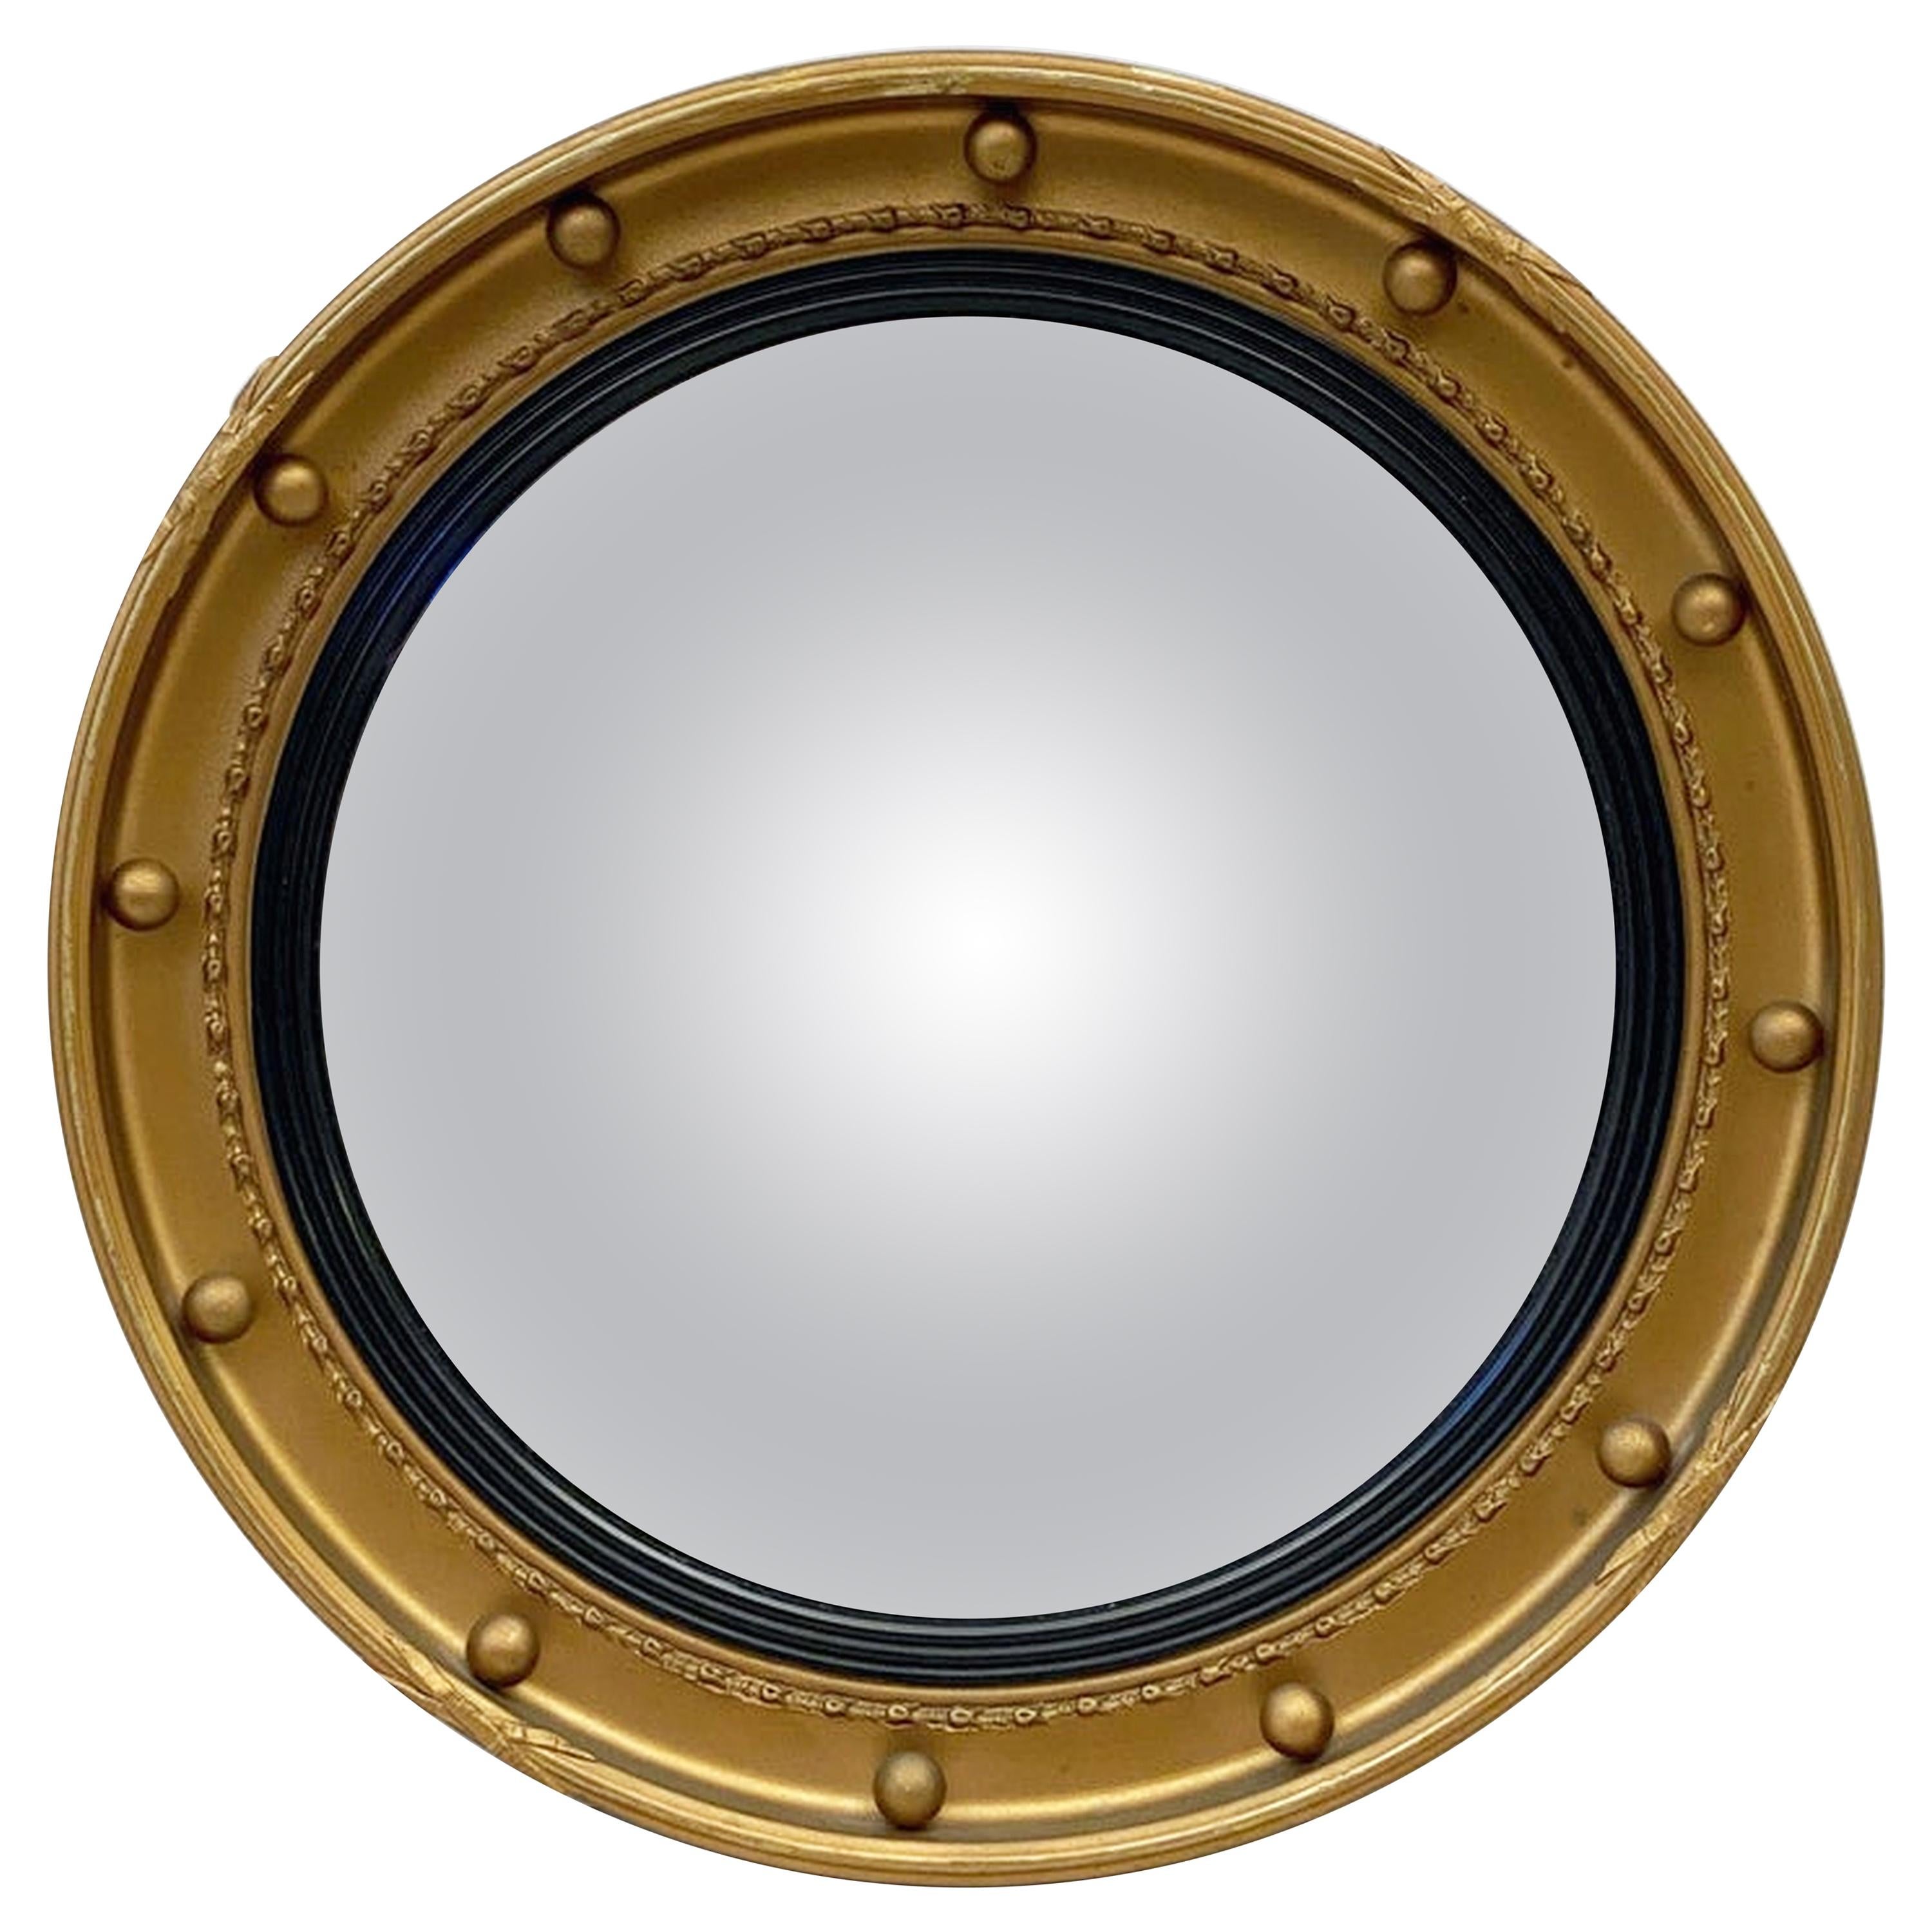 English Round Gilt Framed Convex Mirror (Diameter 18 1/4)